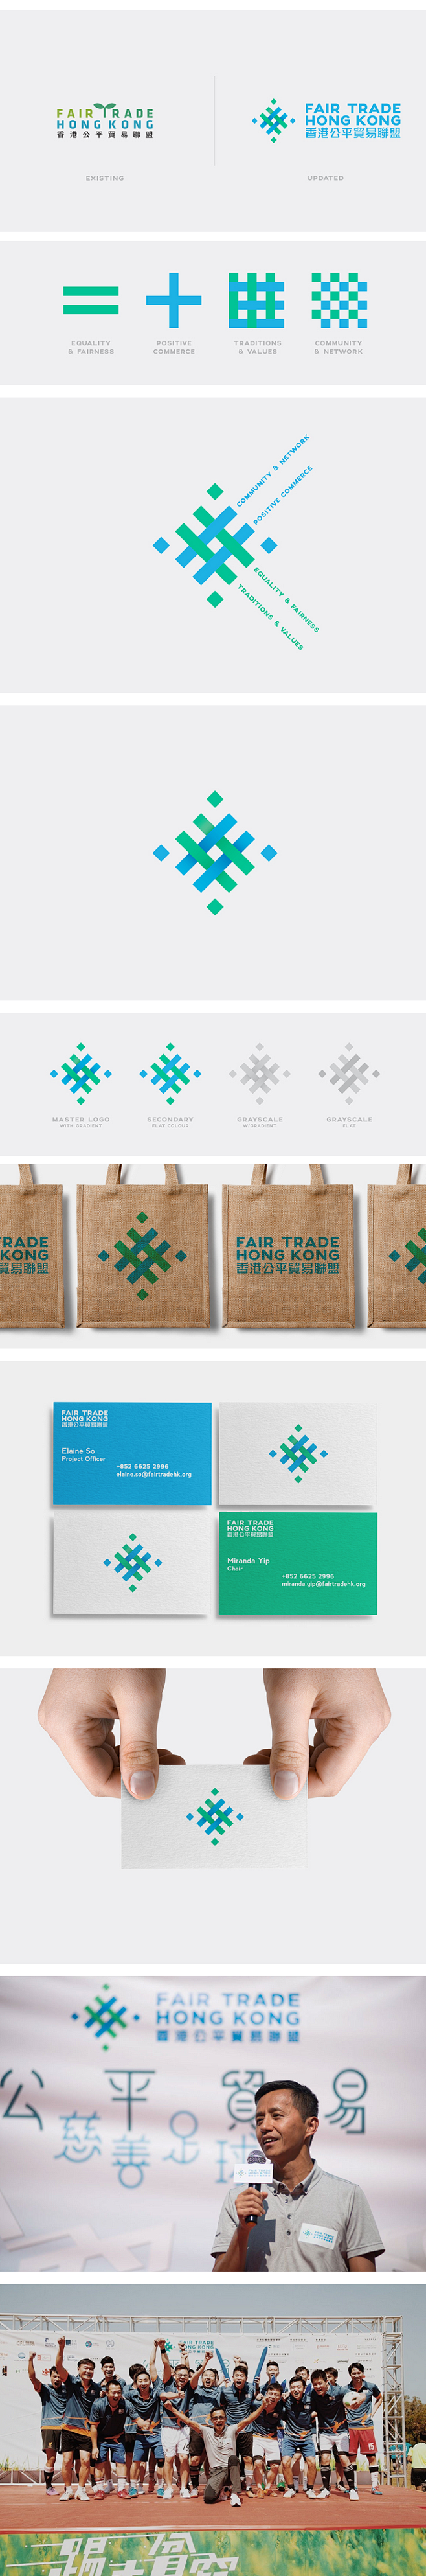 Fair Trade Hong Kong...